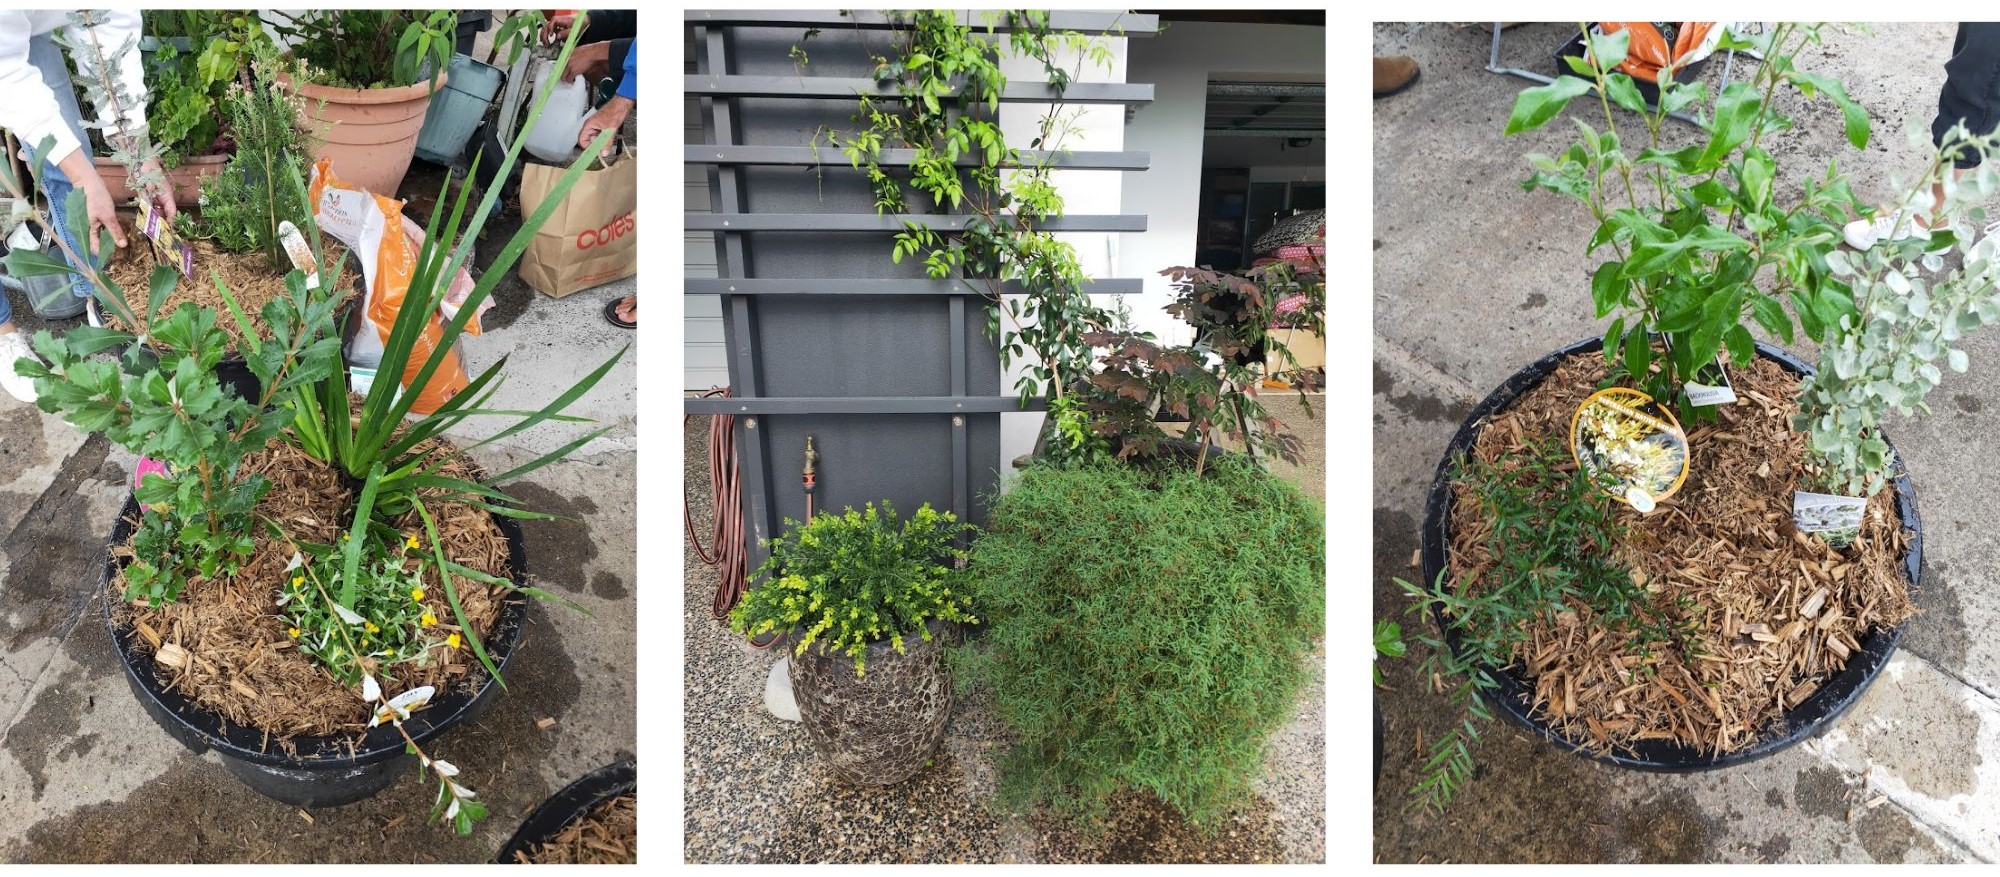 3 pot plants with various native plants